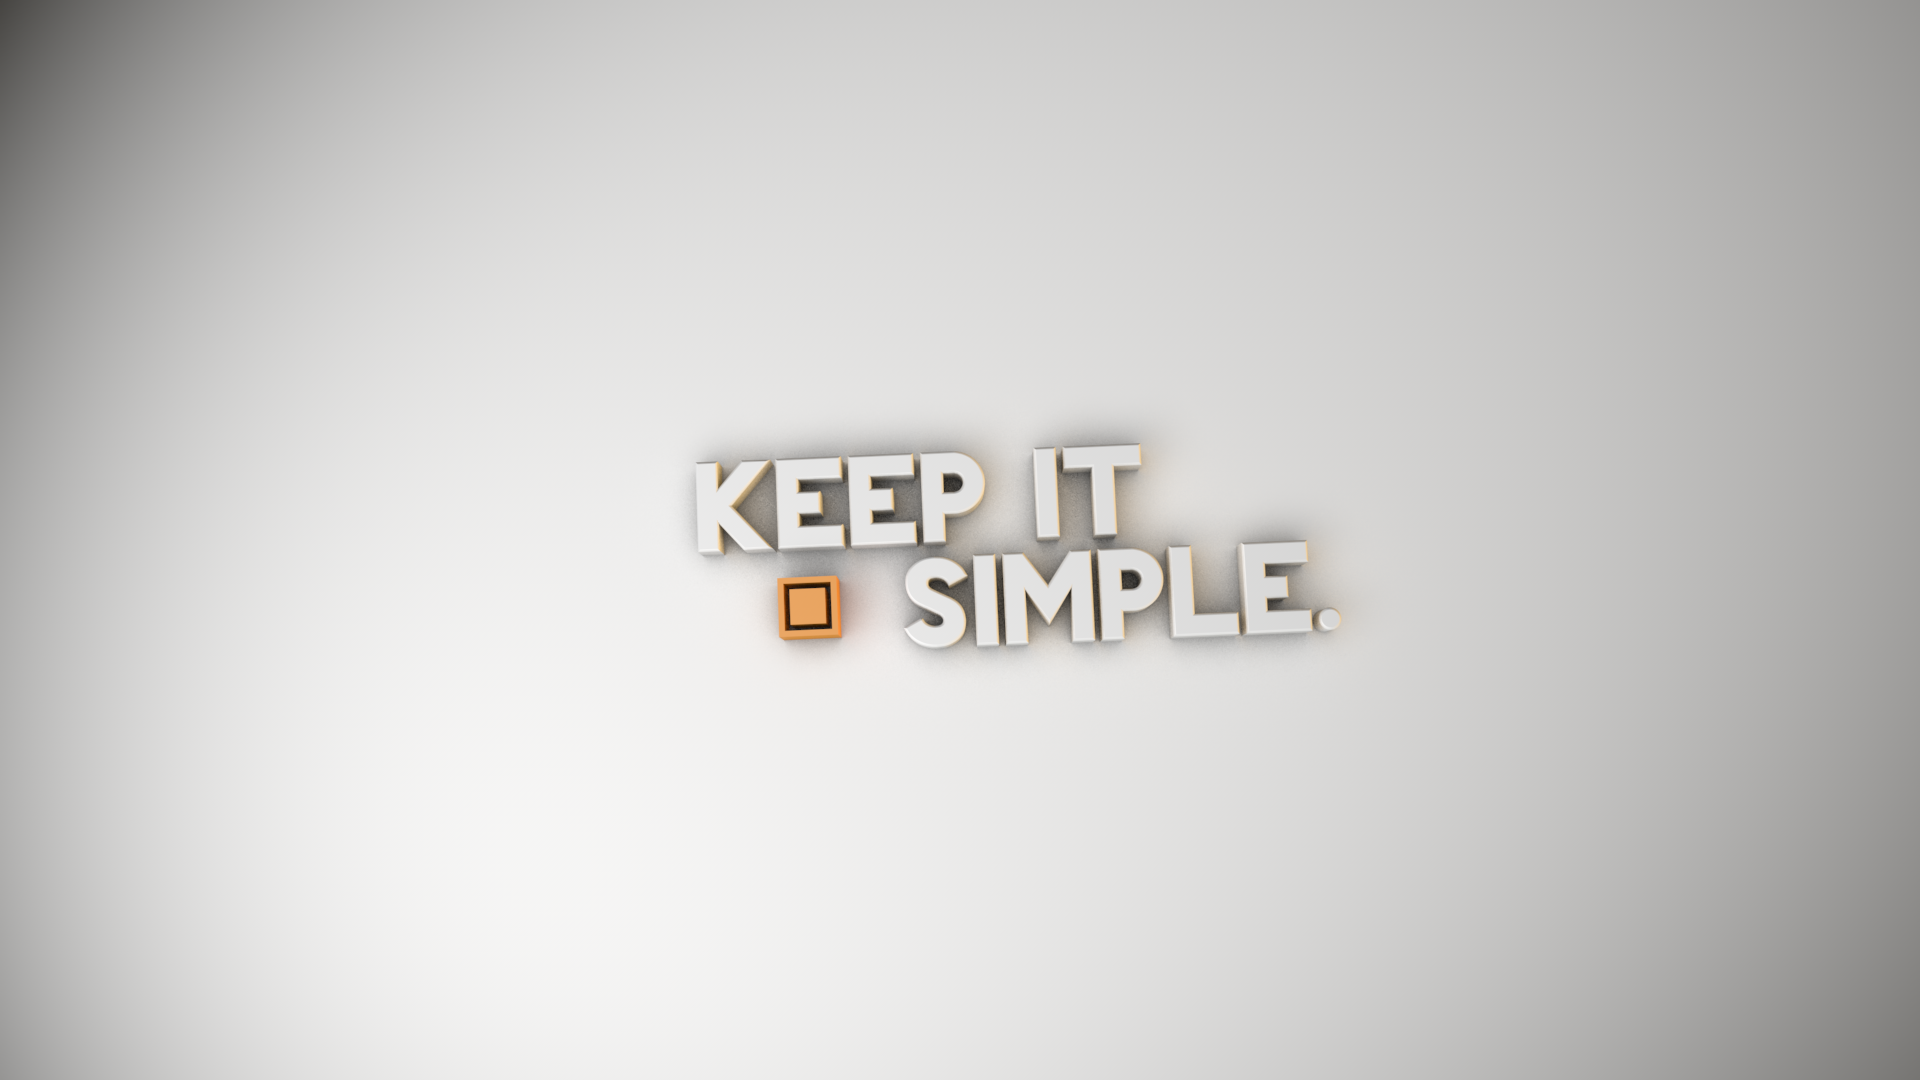 Simple Backgrounds free download | PixelsTalk.Net